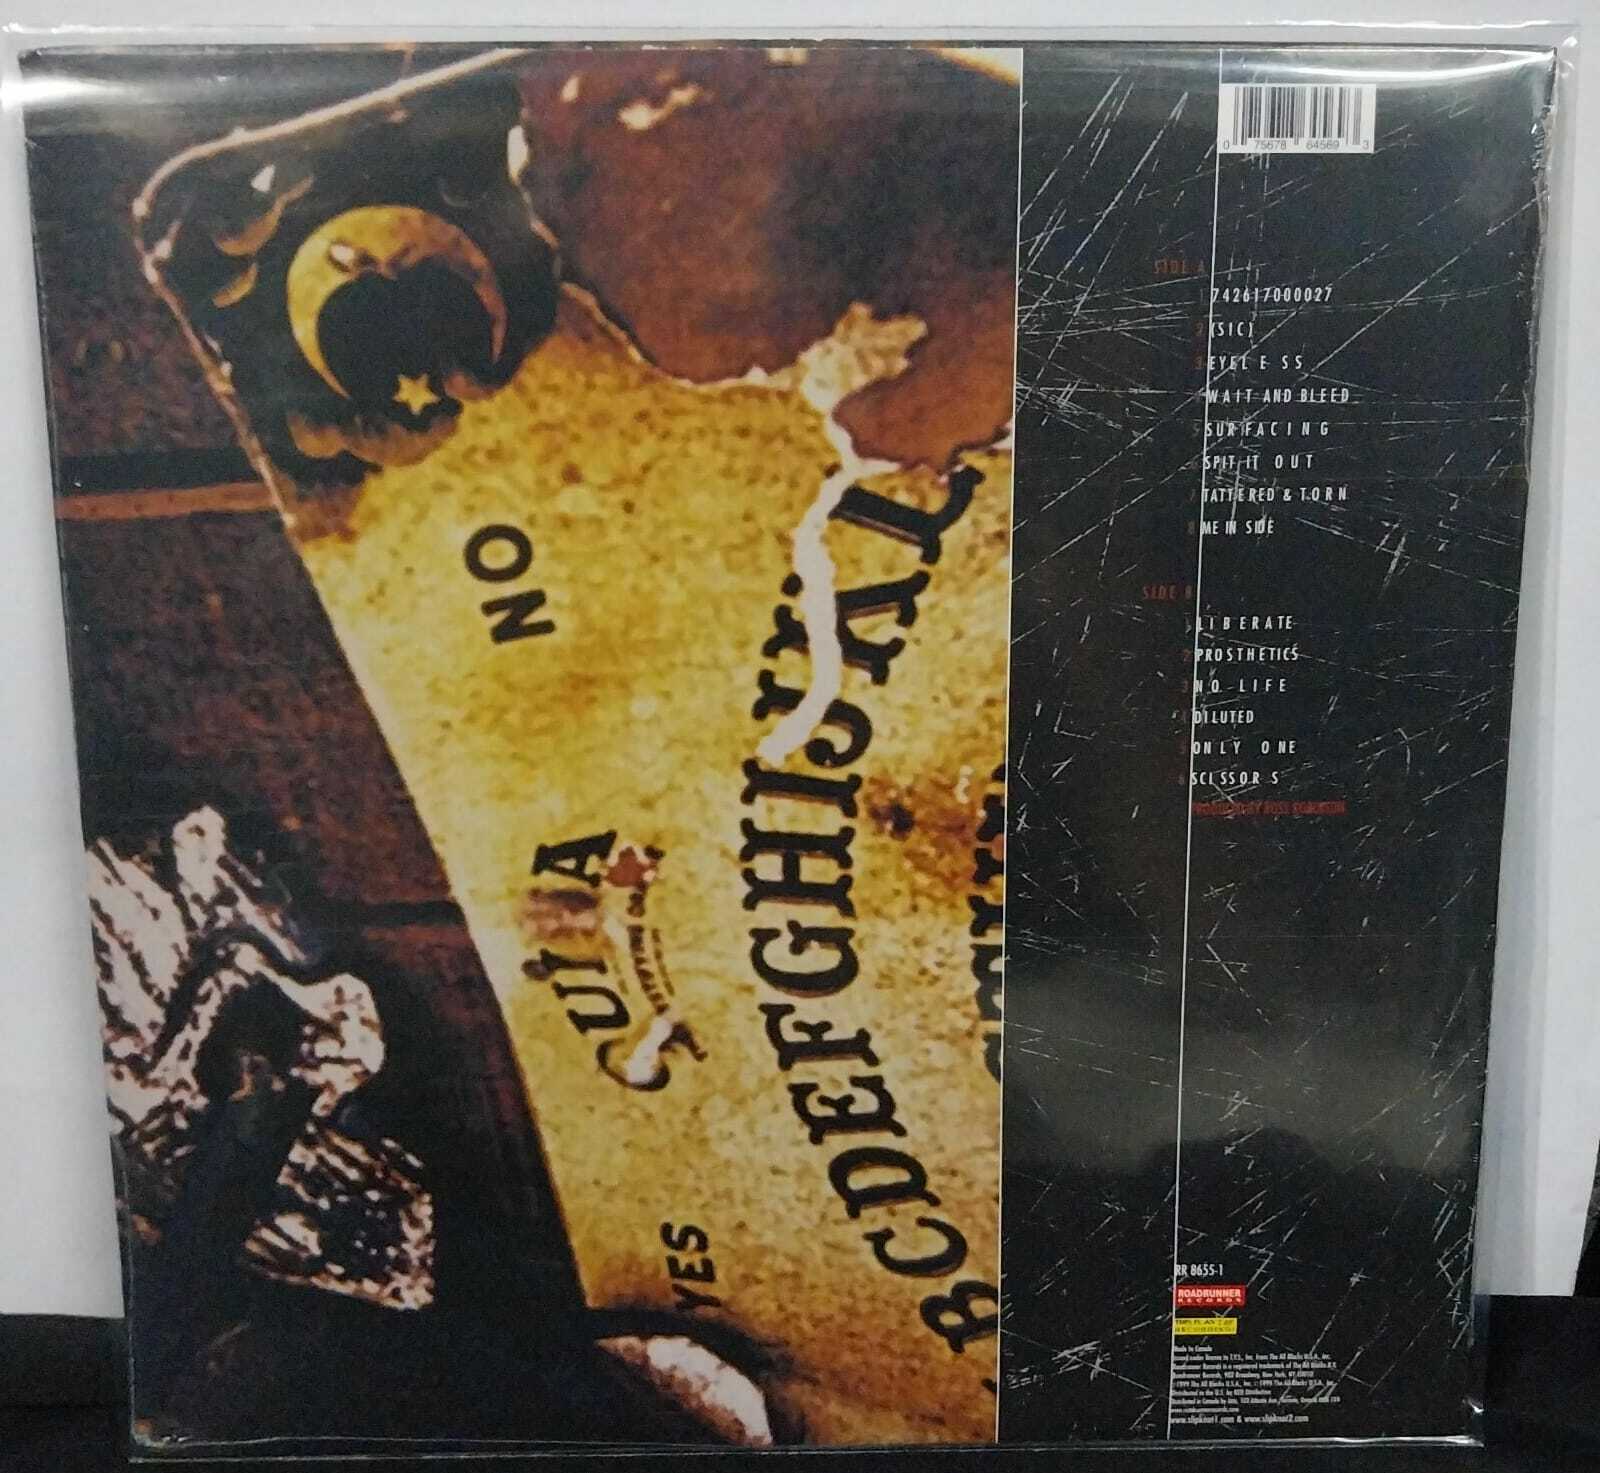 Vinil - Slipknot - 1999 (Lacrado/Lemon/Canada)